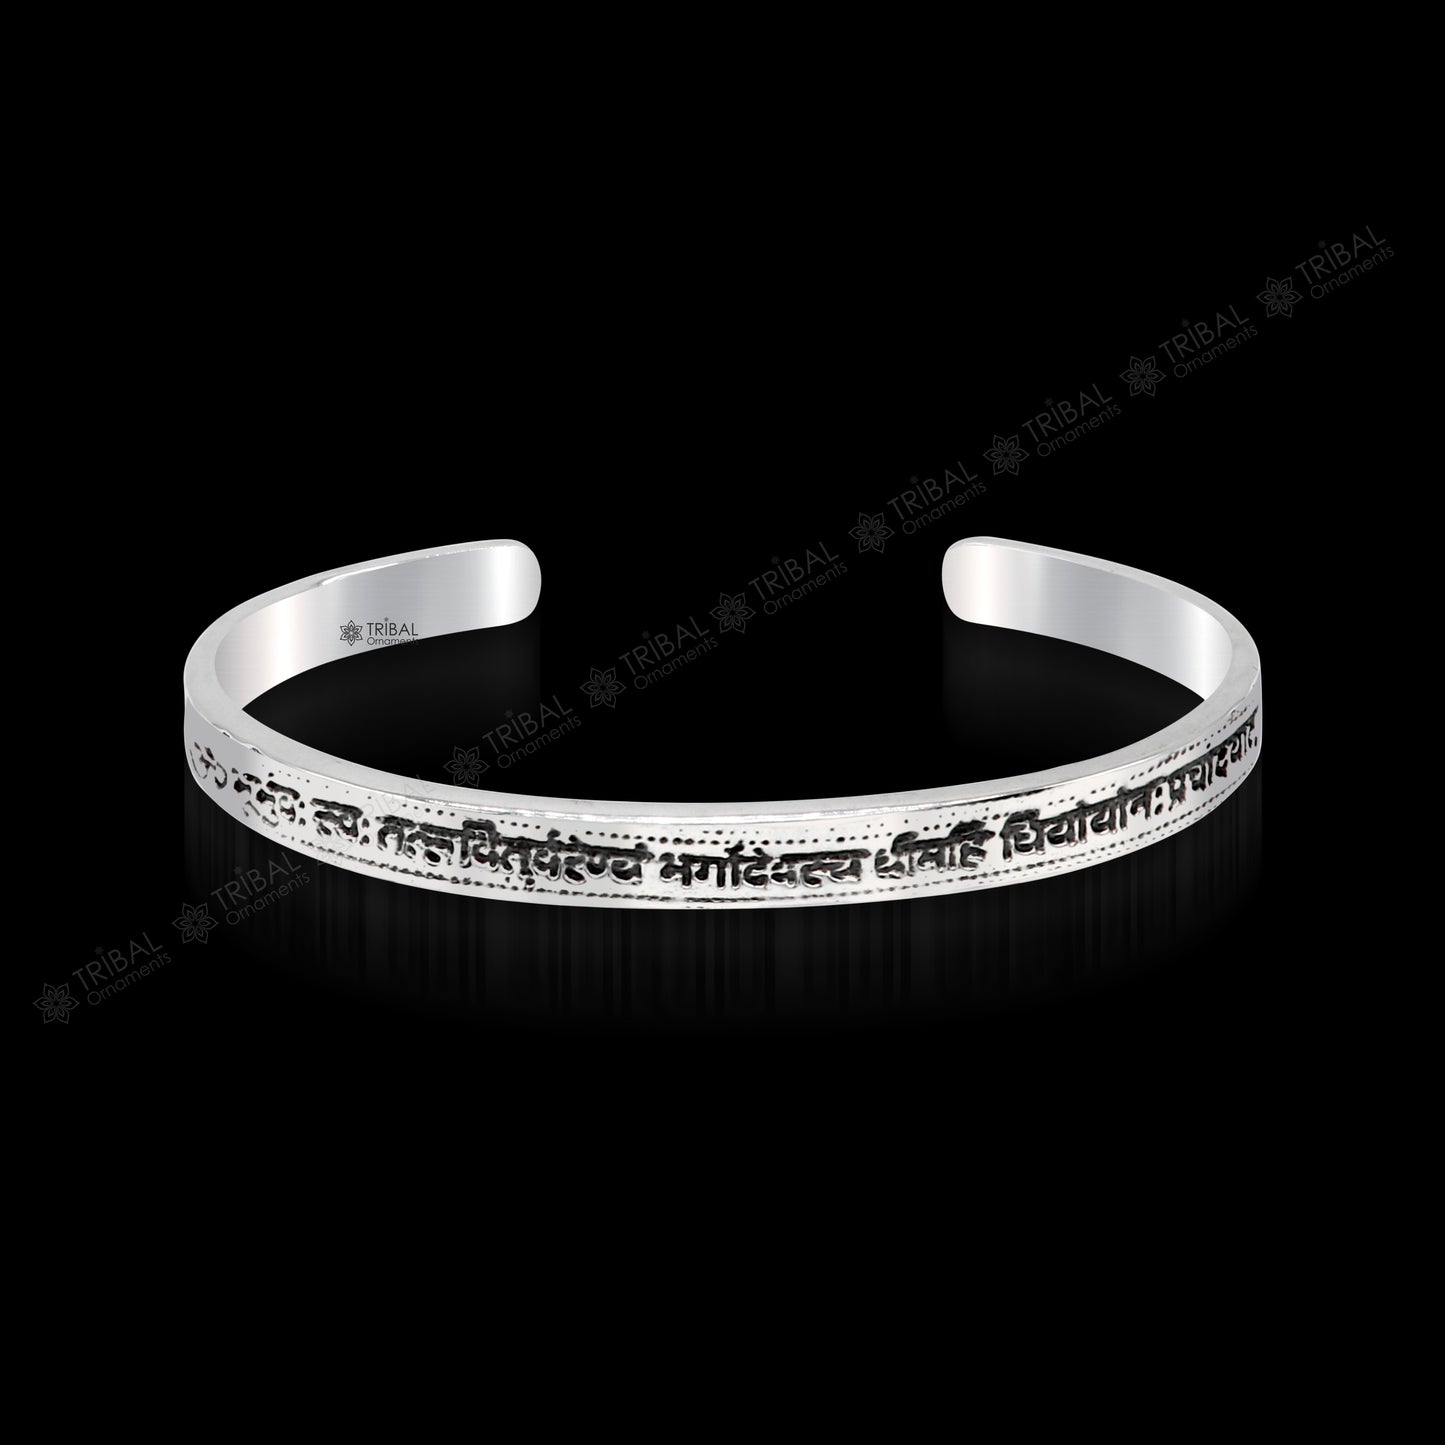 Authentic 925 sterling silver customized Gayatri Mantra design cuff kada bracelet, easy to adjust with your wrist, unisex jewelry cuff41